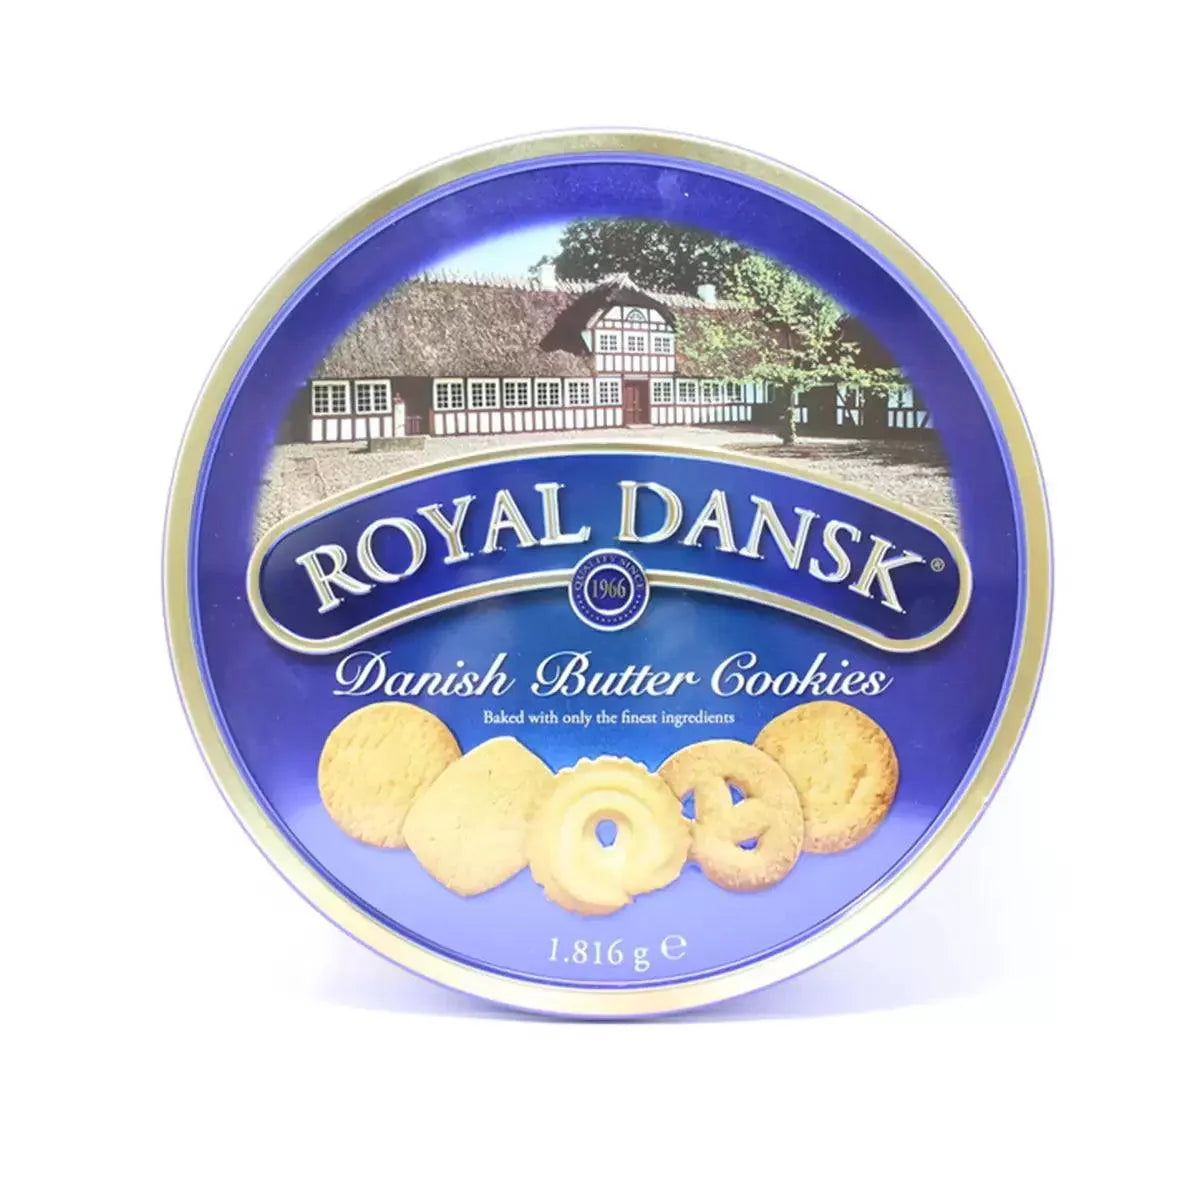 Royal Dansk Danish Butter Cookies 1.81Kg